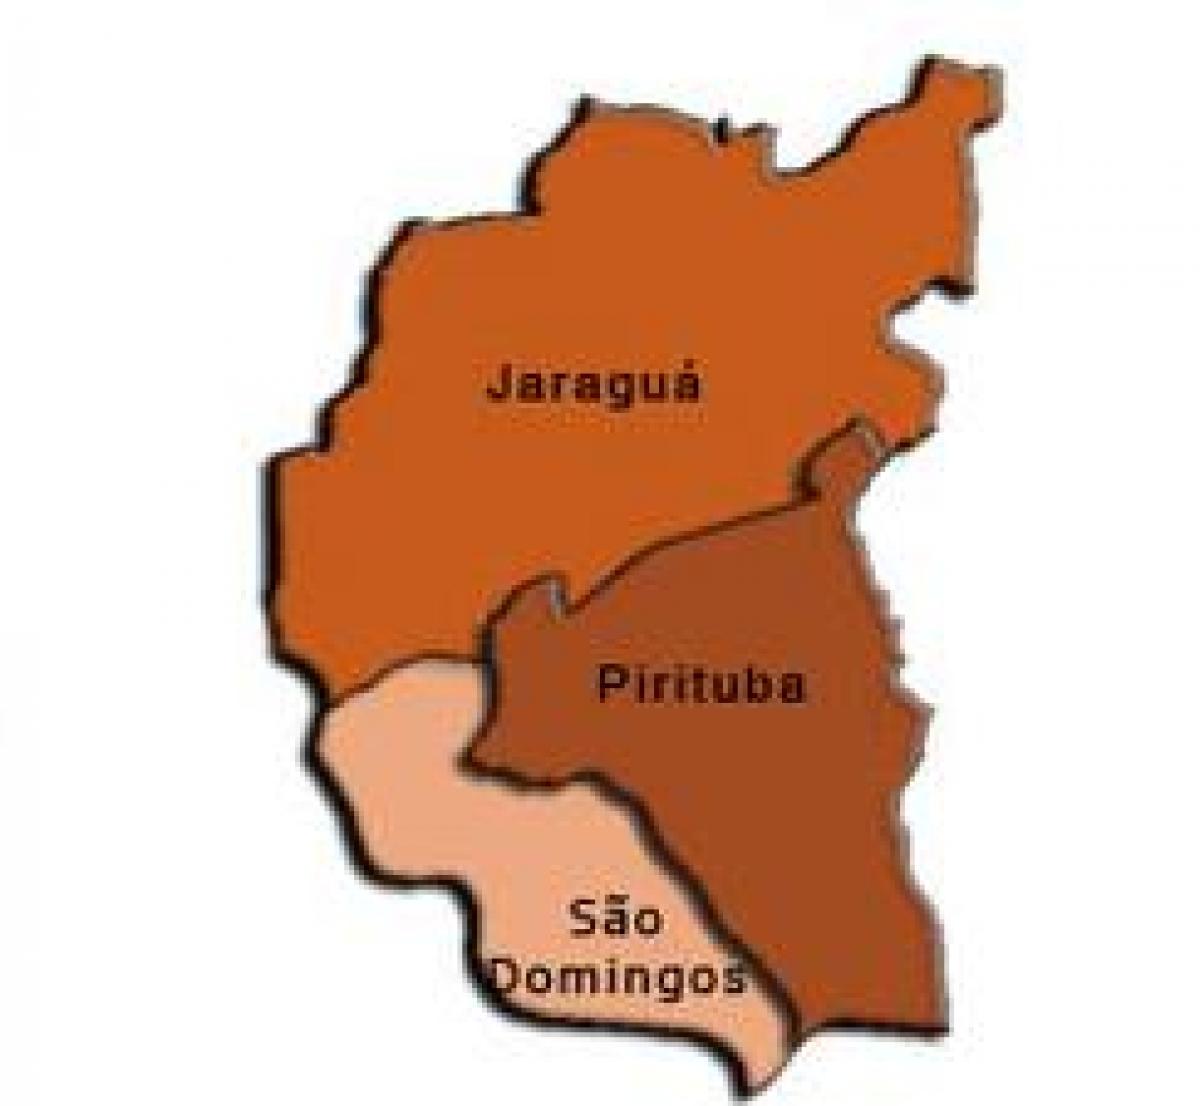 Peta dari Pirituba-Jaraguá sub-prefektur